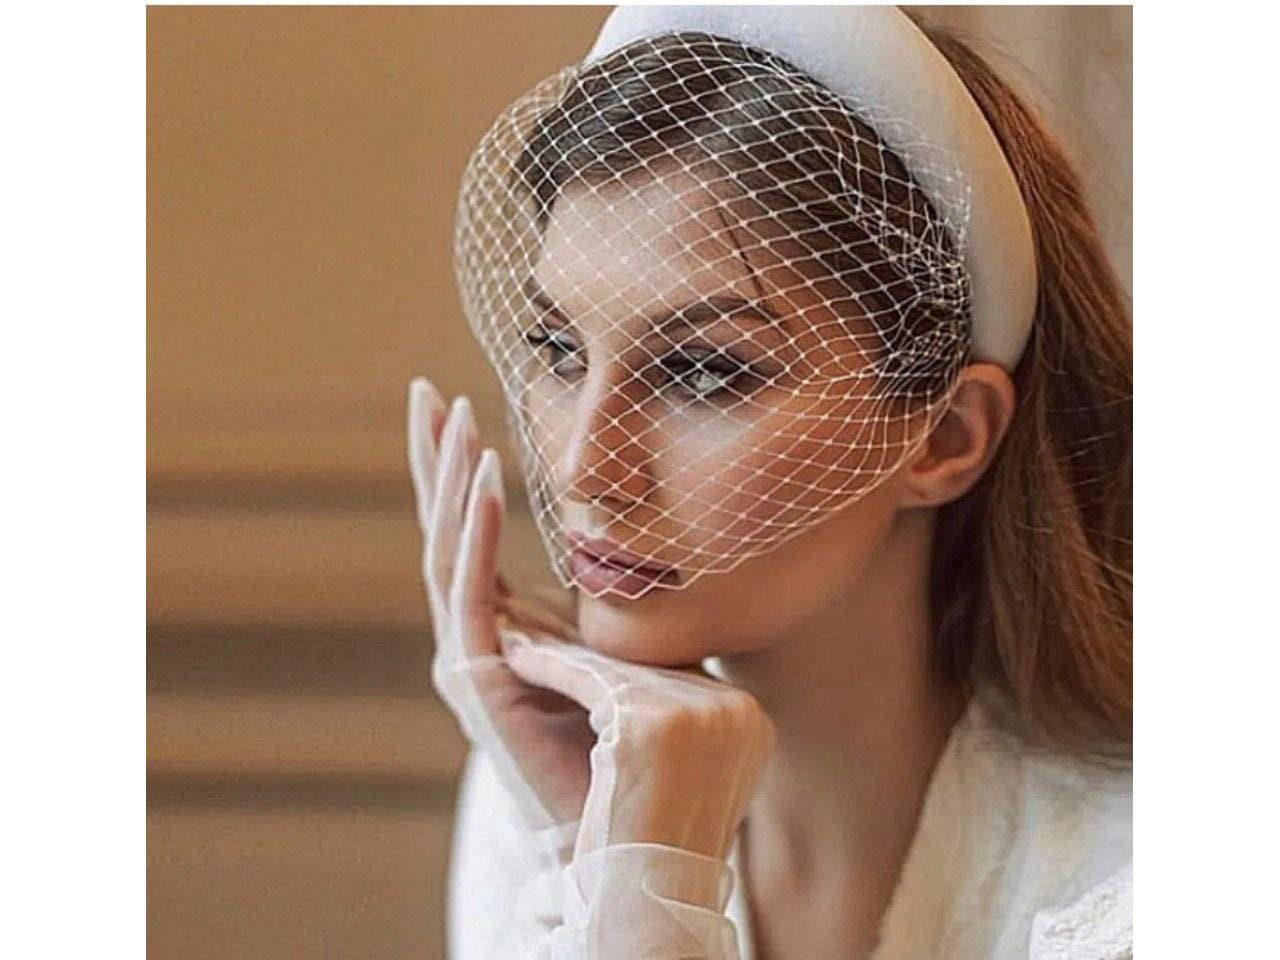 Bling Wedding Finger Tip Veil Rhinestone Crystal Headband Bridal Veil –  TulleLux Bridal Crowns & Accessories